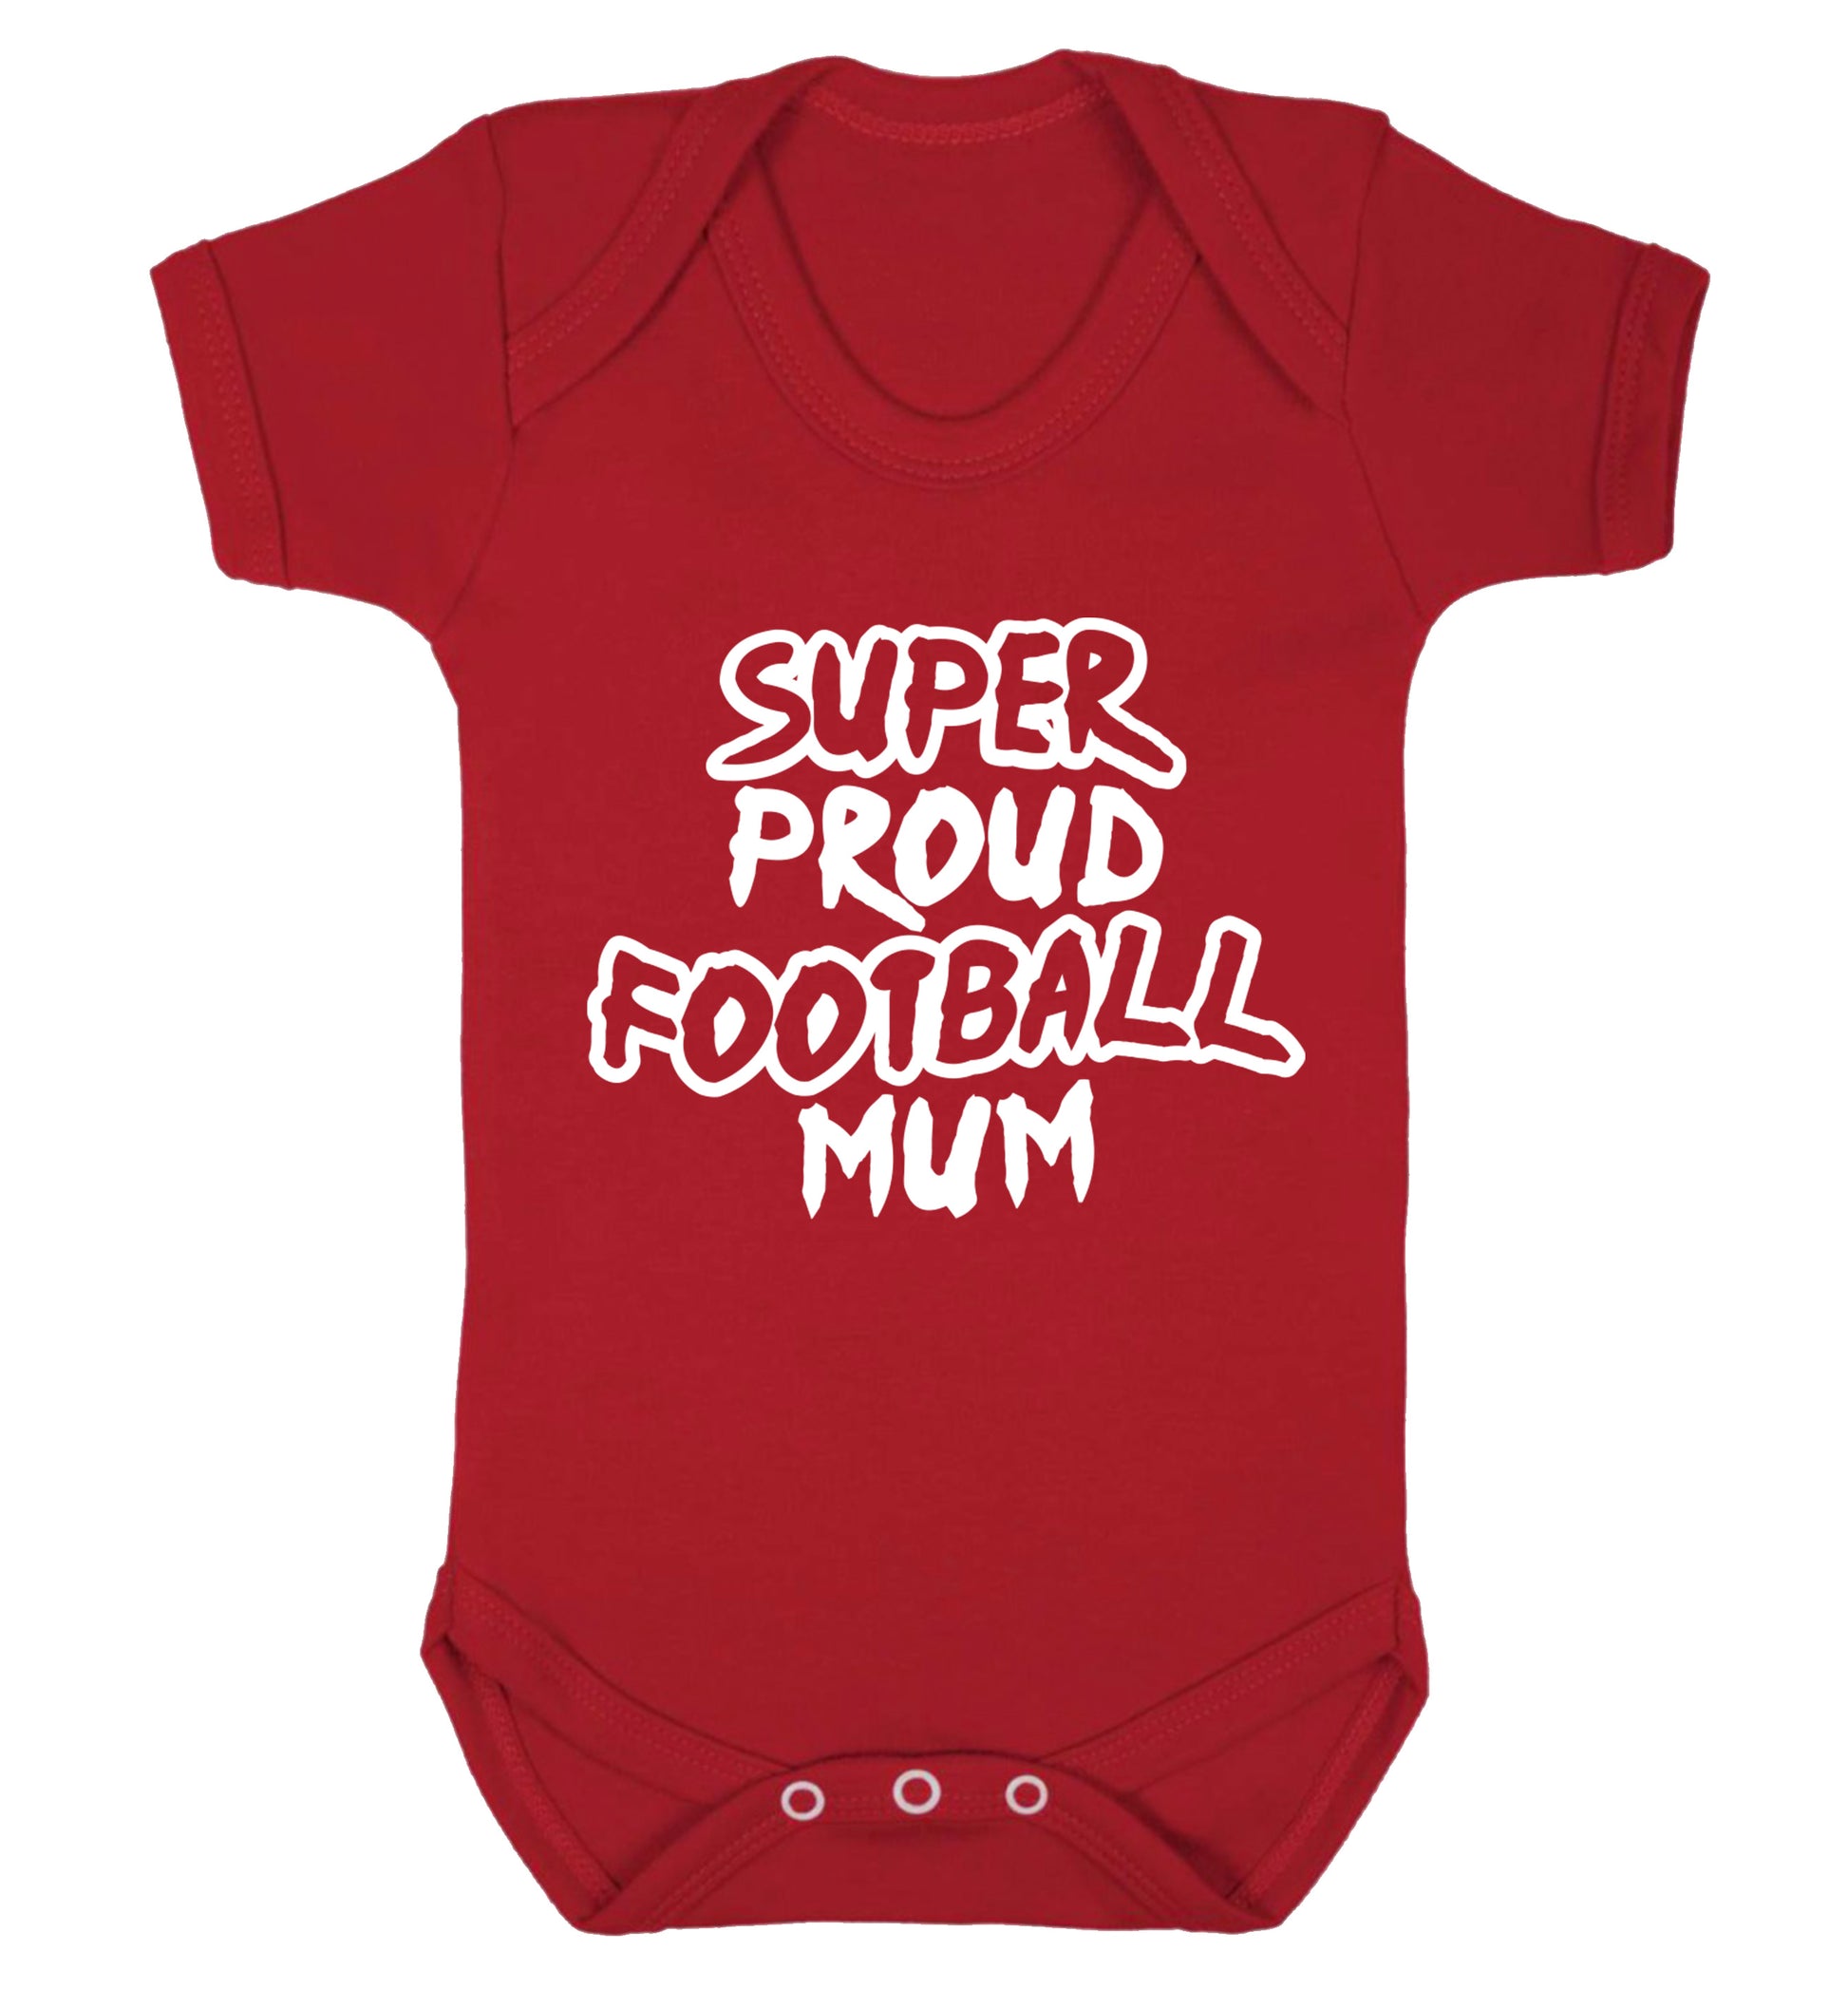 Super proud football mum Baby Vest red 18-24 months